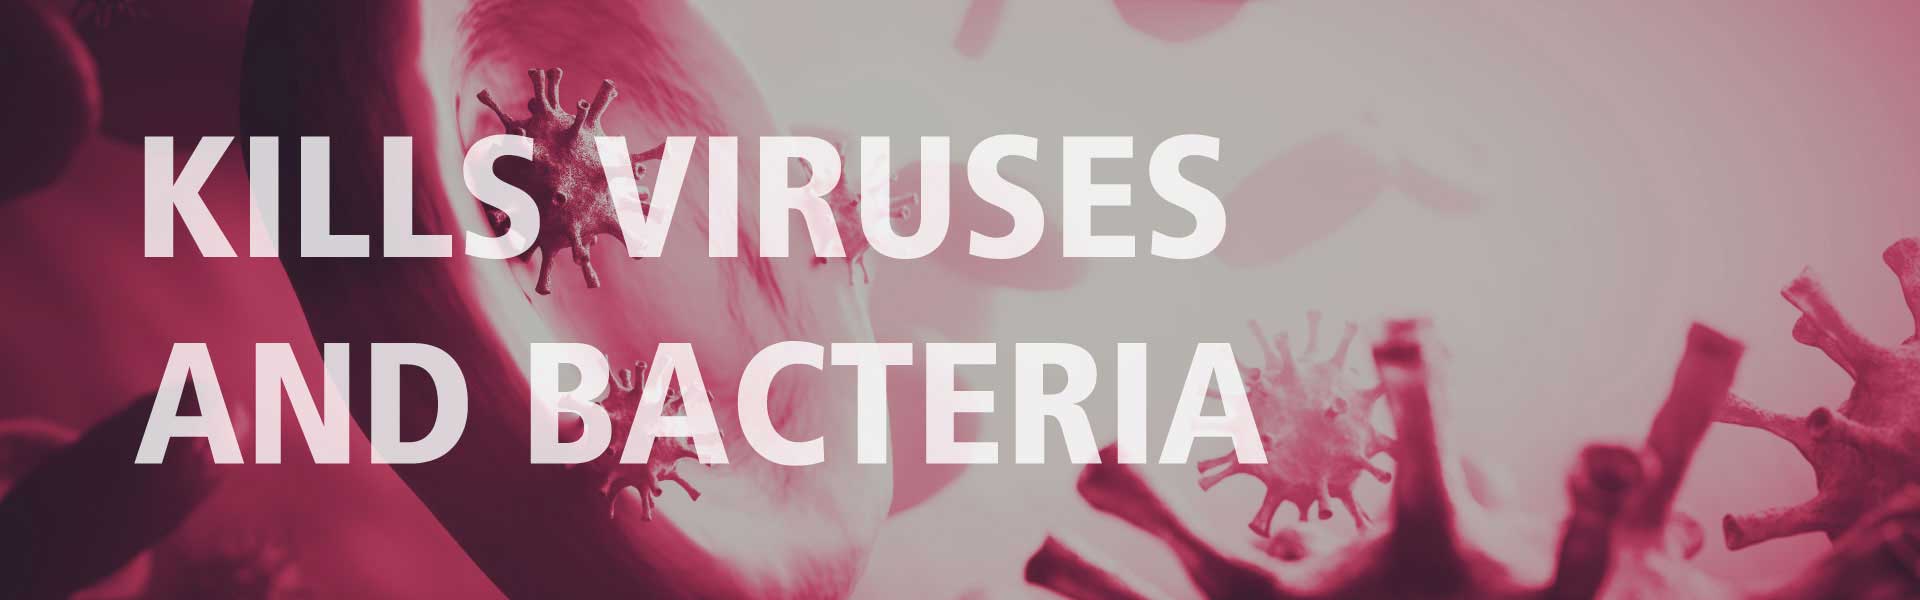 Kills virus and bacteria 